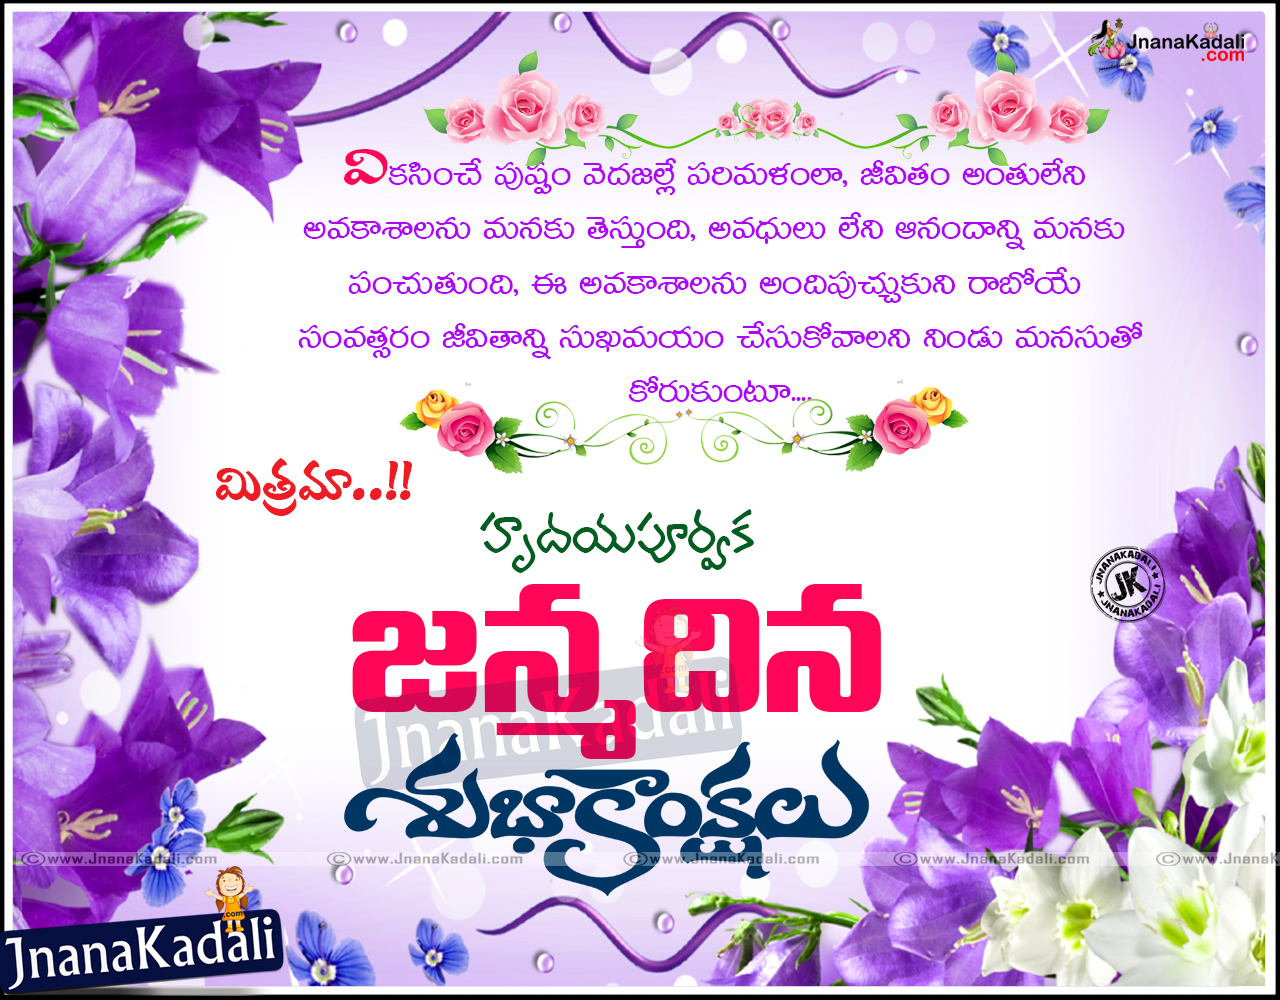 Beautiful Telugu Birthday Messages and Wishes Images | JNANA ...